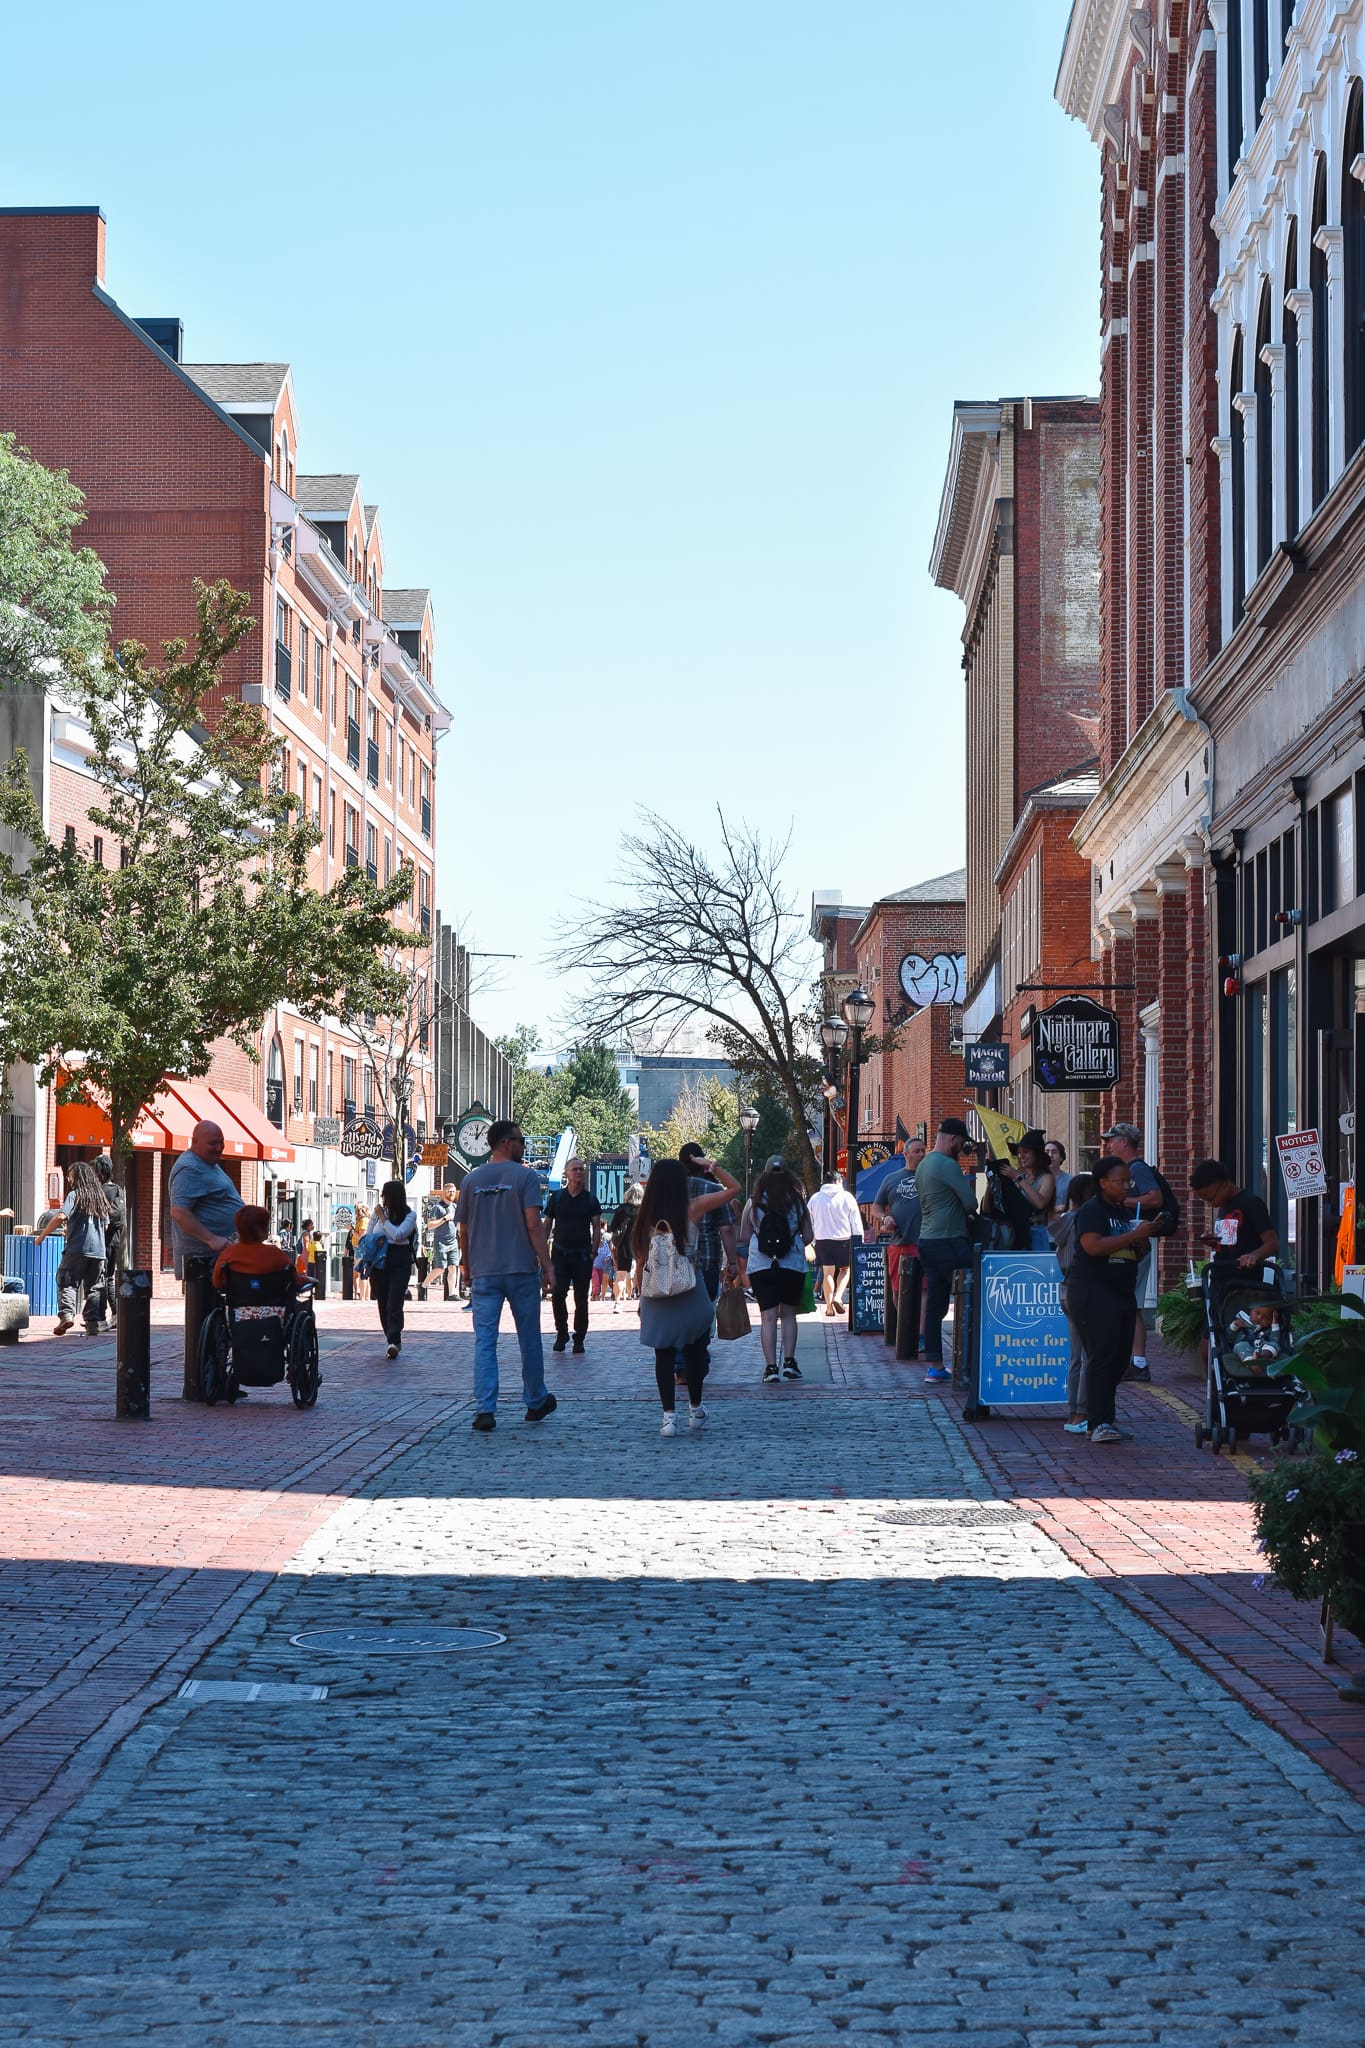 Downtown Salem, Massachusetts